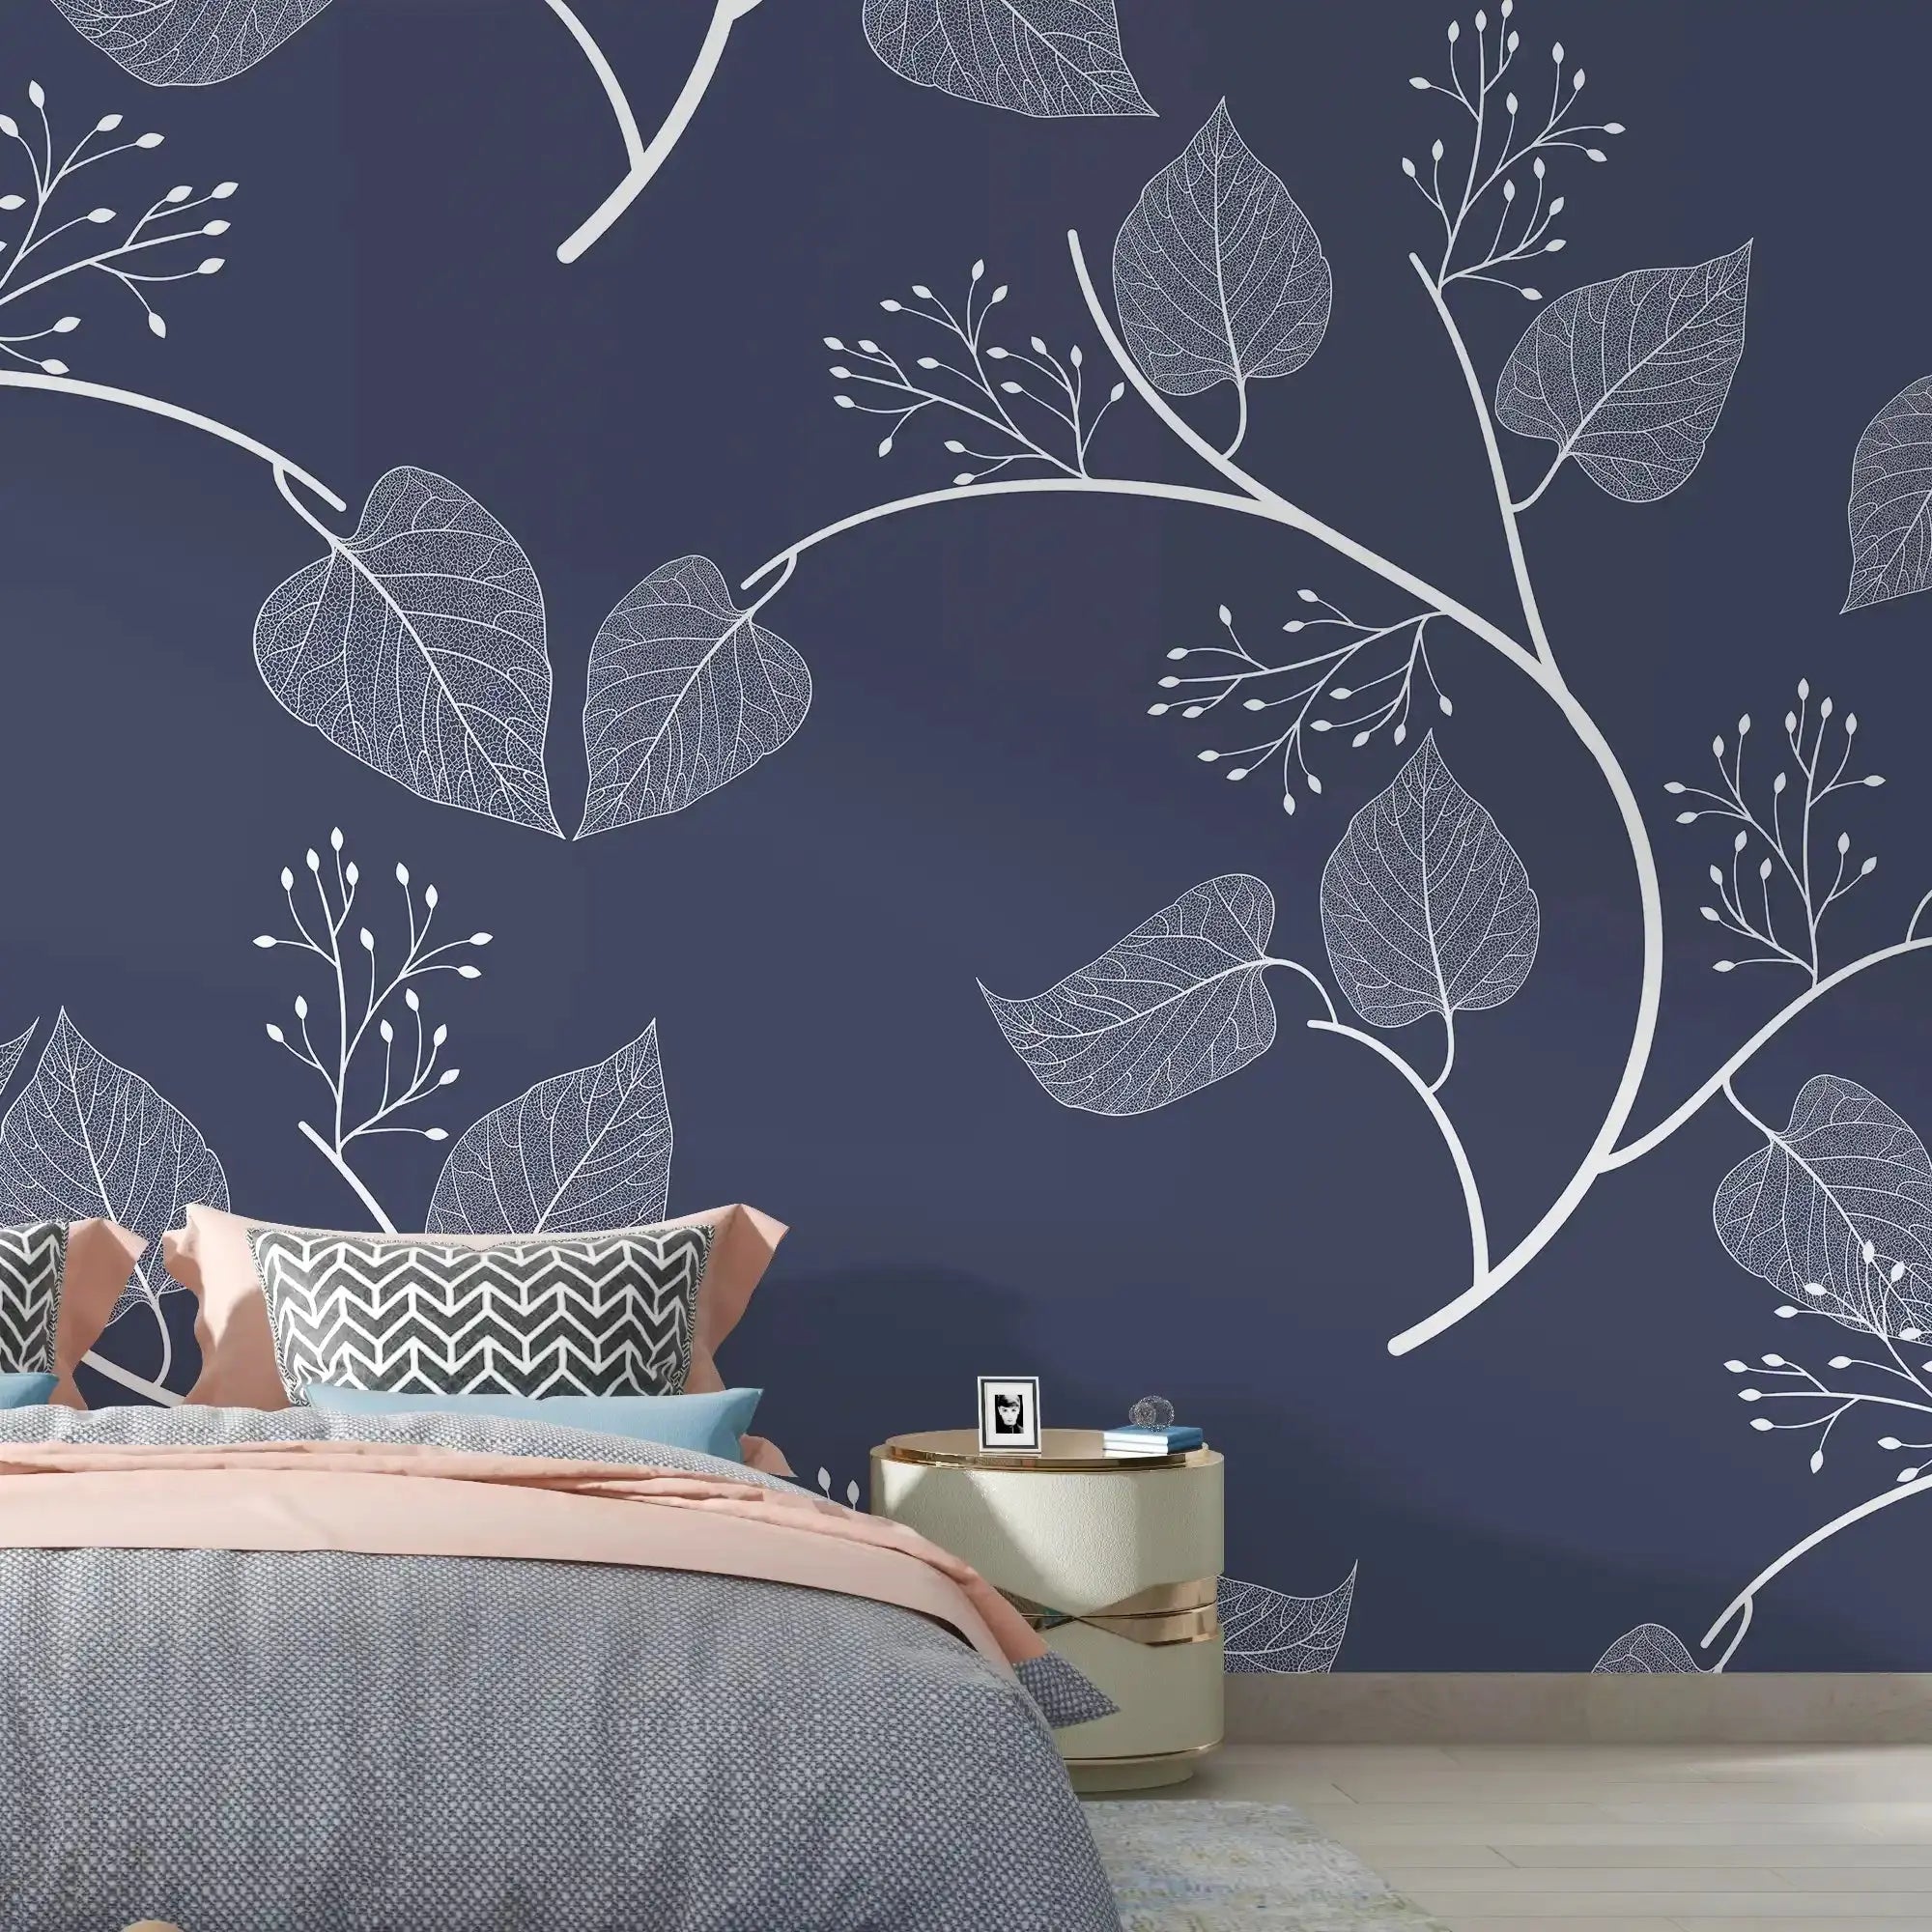 3104-C / Floral Peel and Stick Wallpaper, Botanical Leaf Design Wall Mural - Artevella